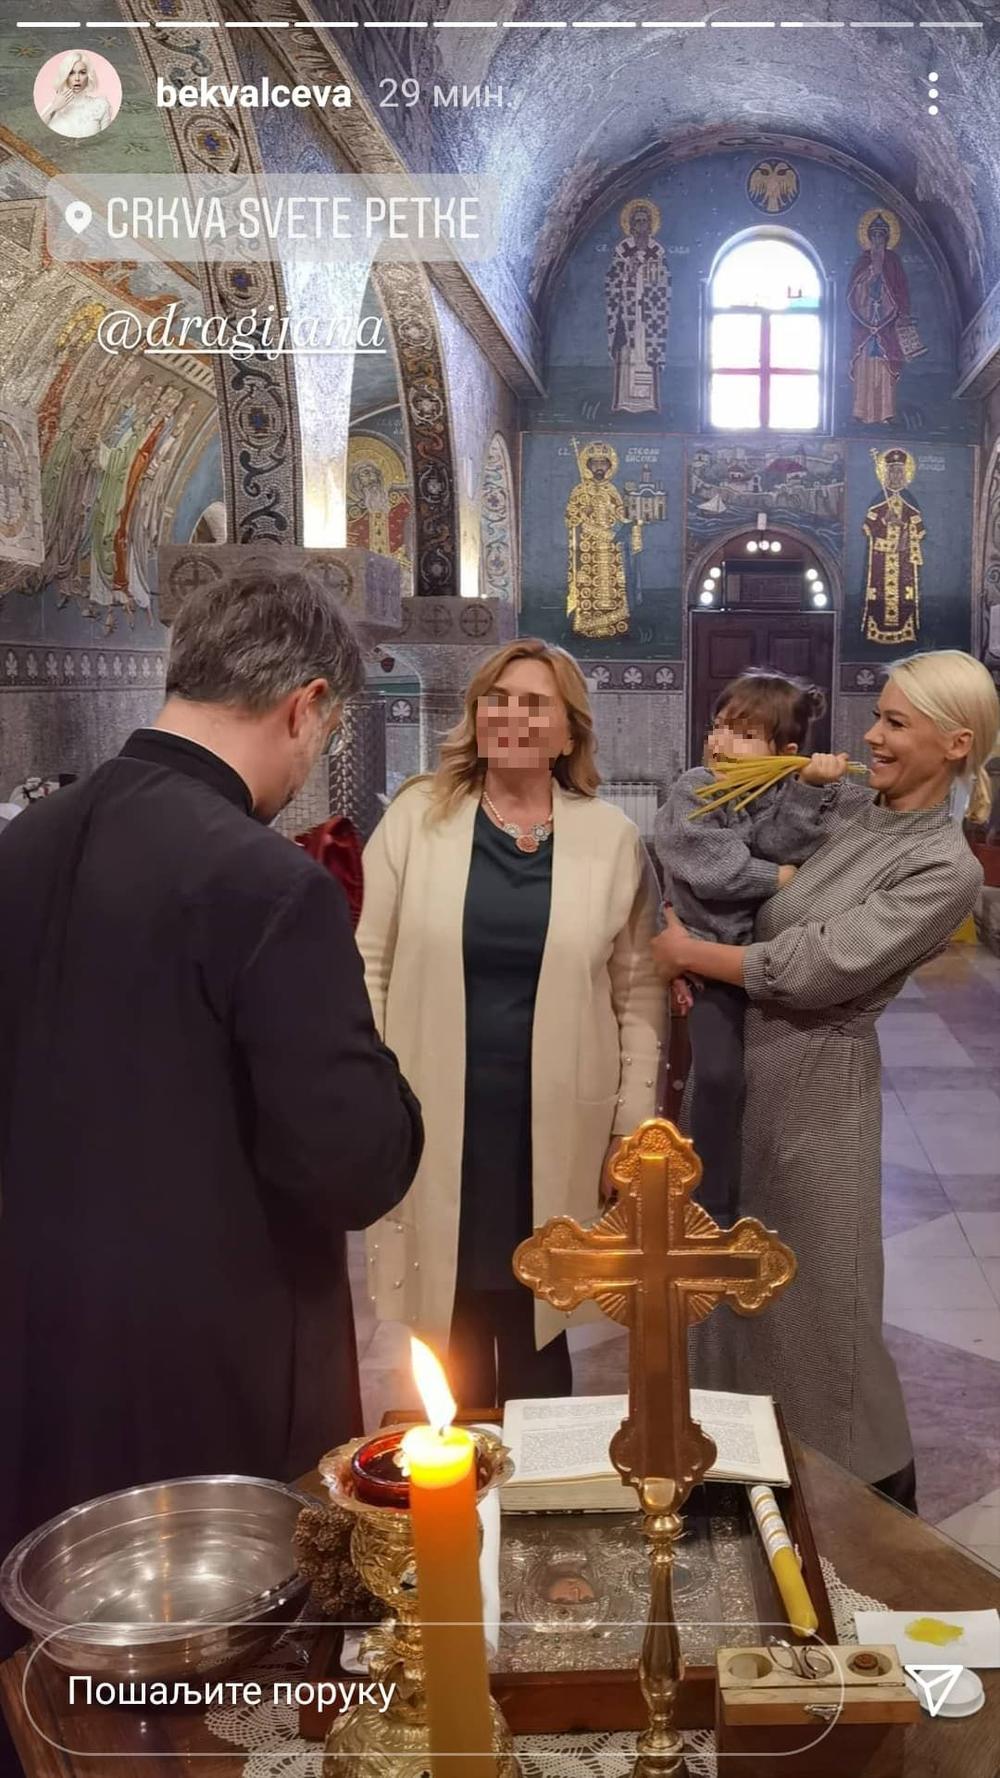 <p>Popularna pevačica danas je u Beogradu krstila mlađu ćerku</p>